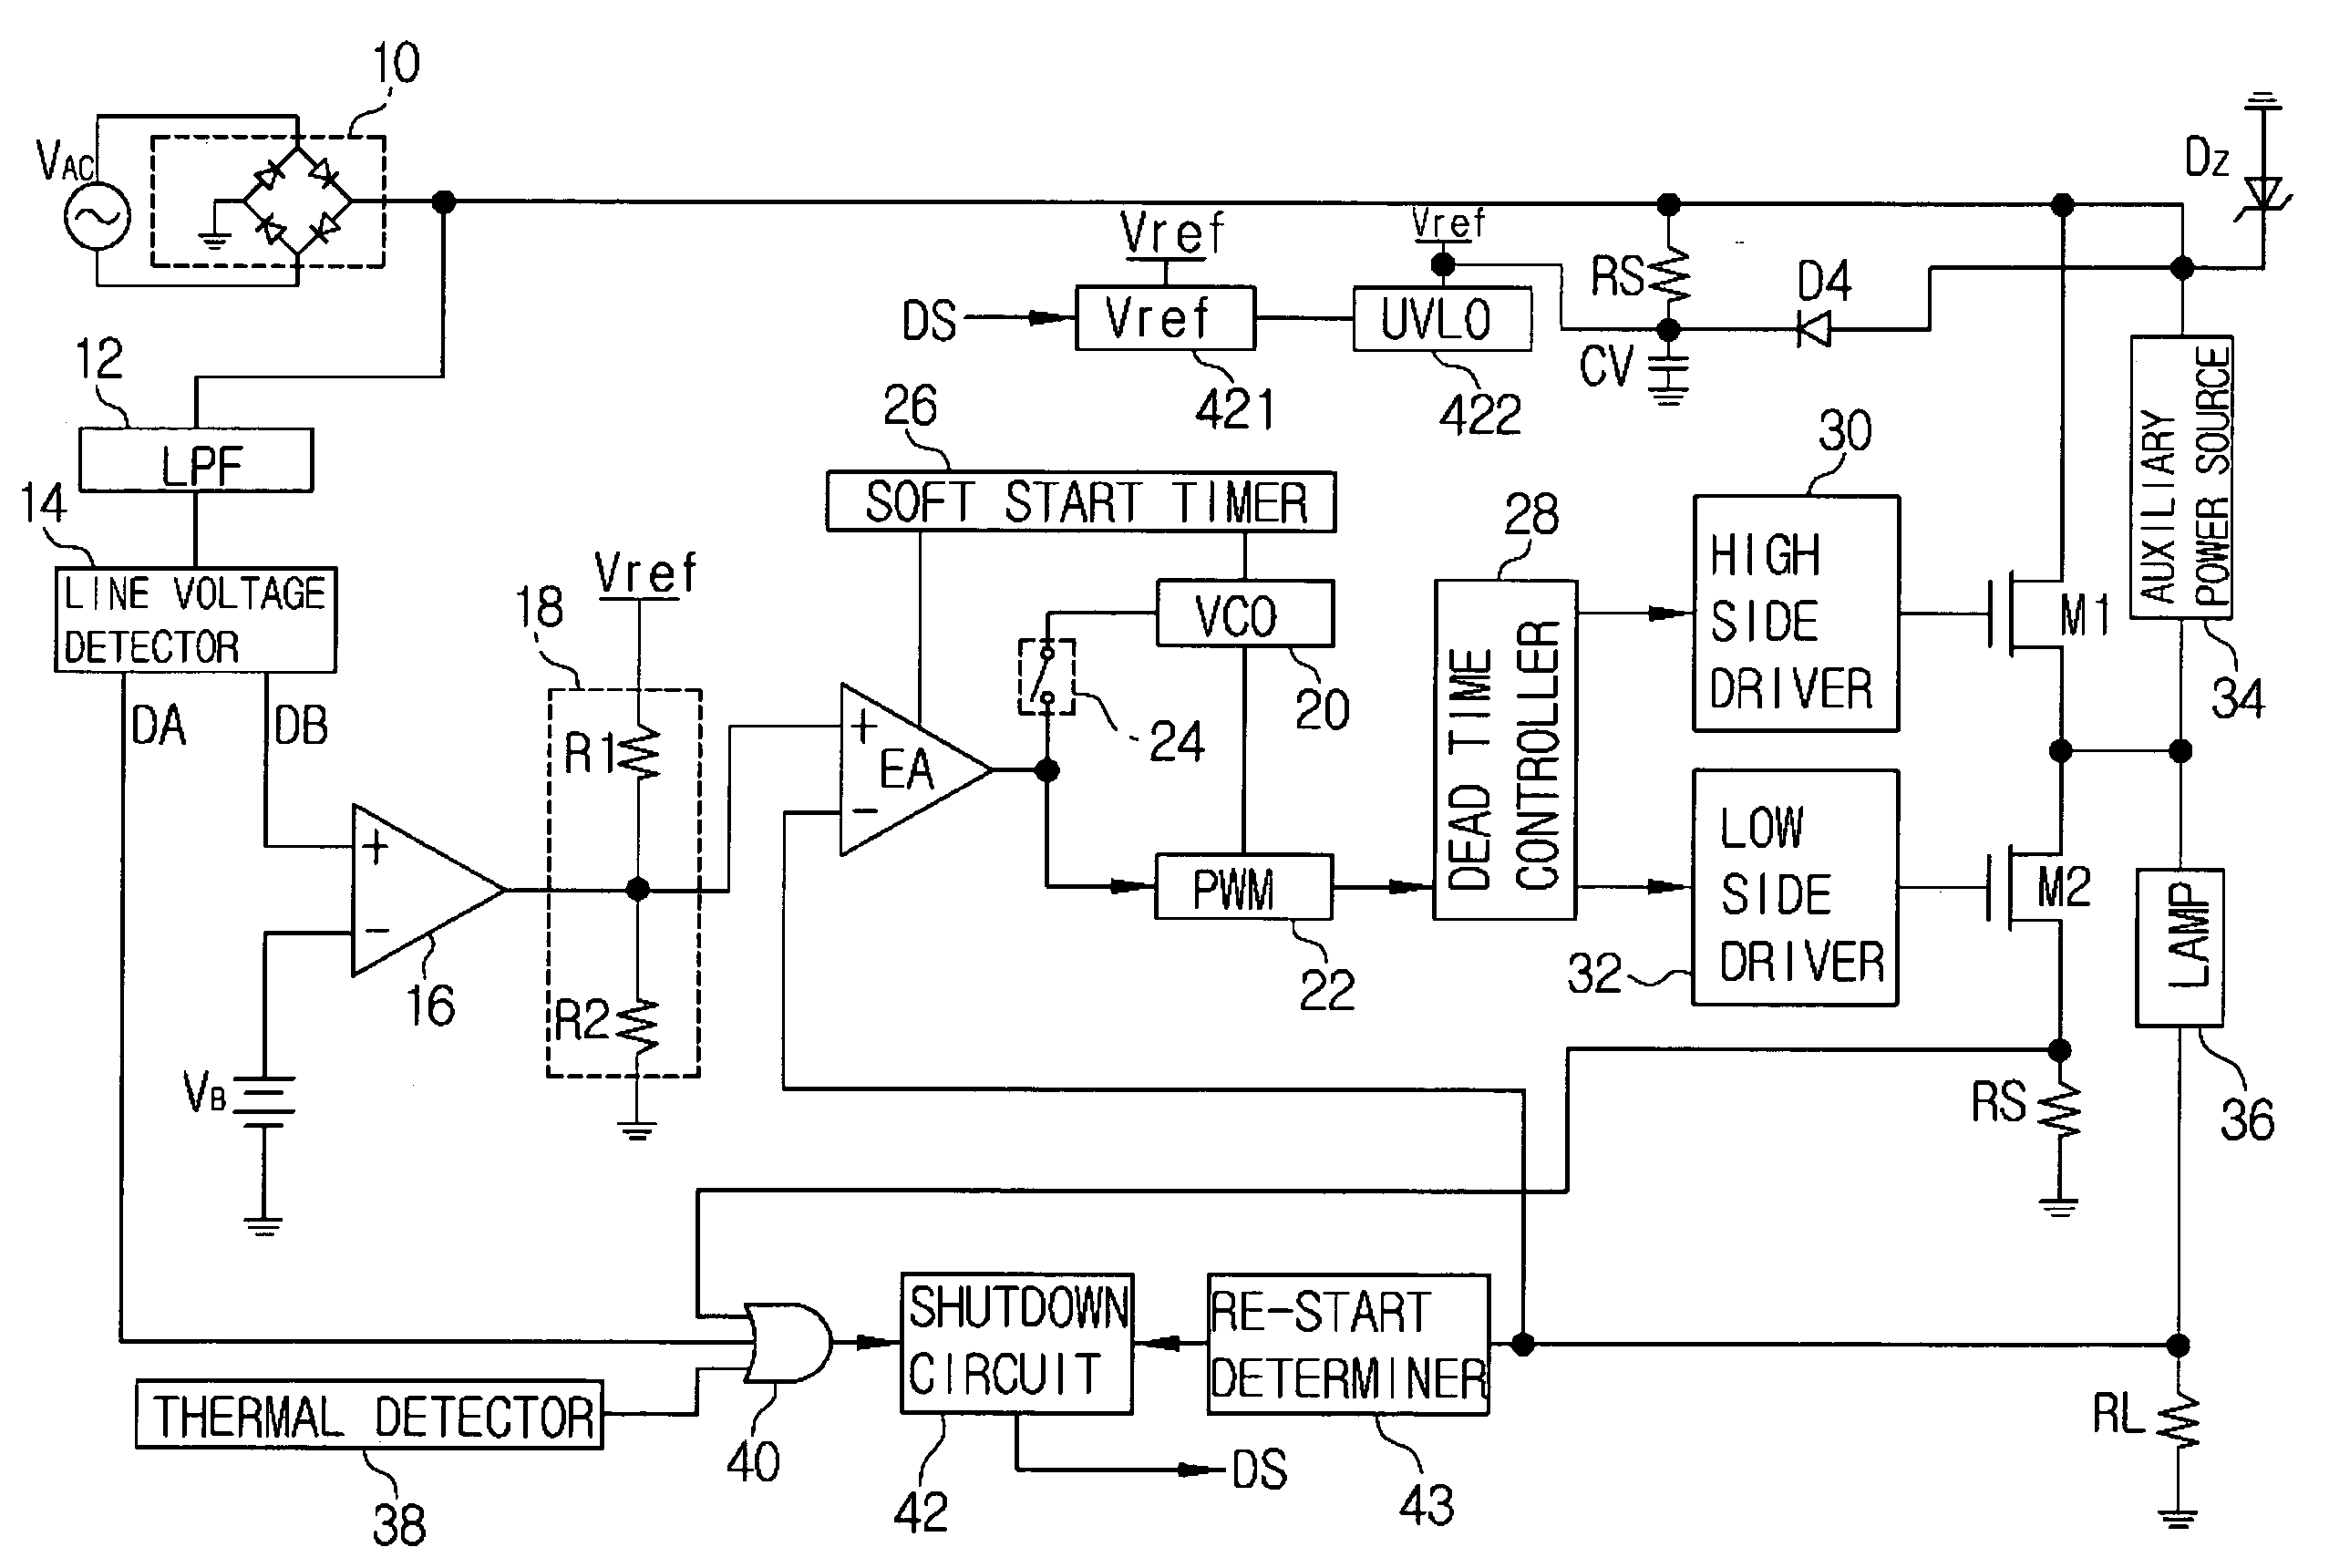 Power supply apparatus using half-bridge circuit